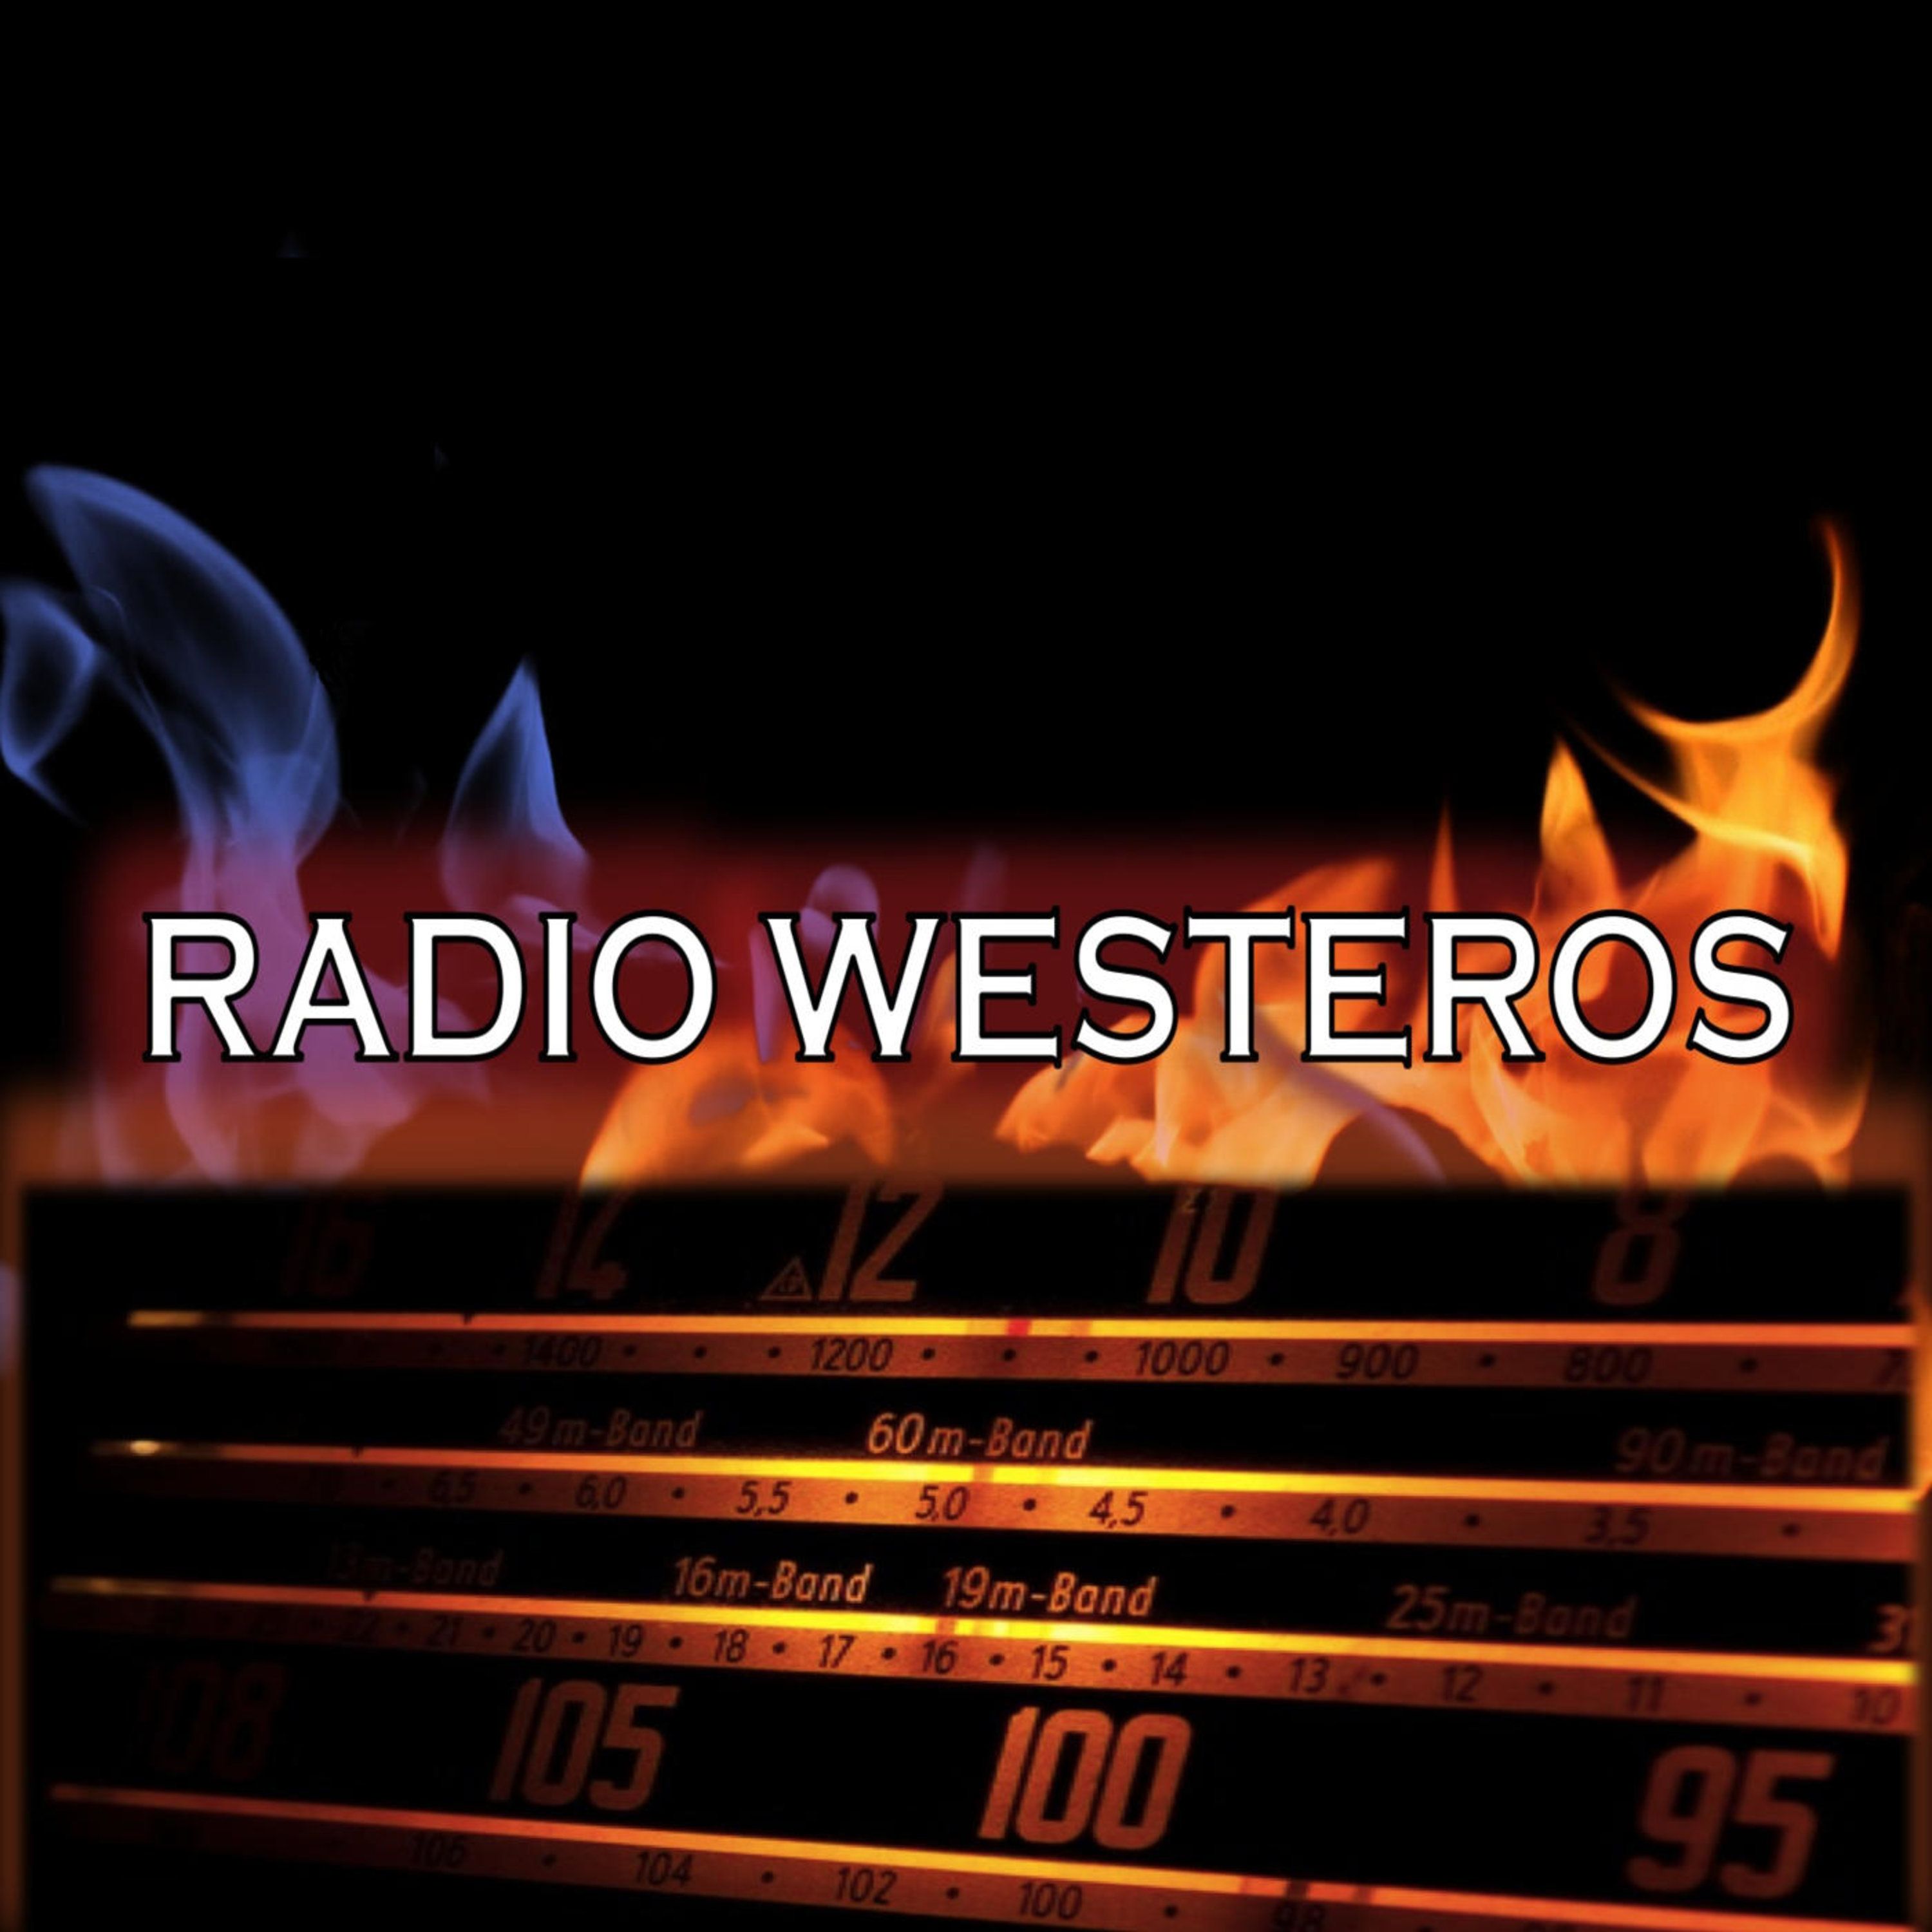 Radio Westeros Episode 38 - Myths & Legends of the East